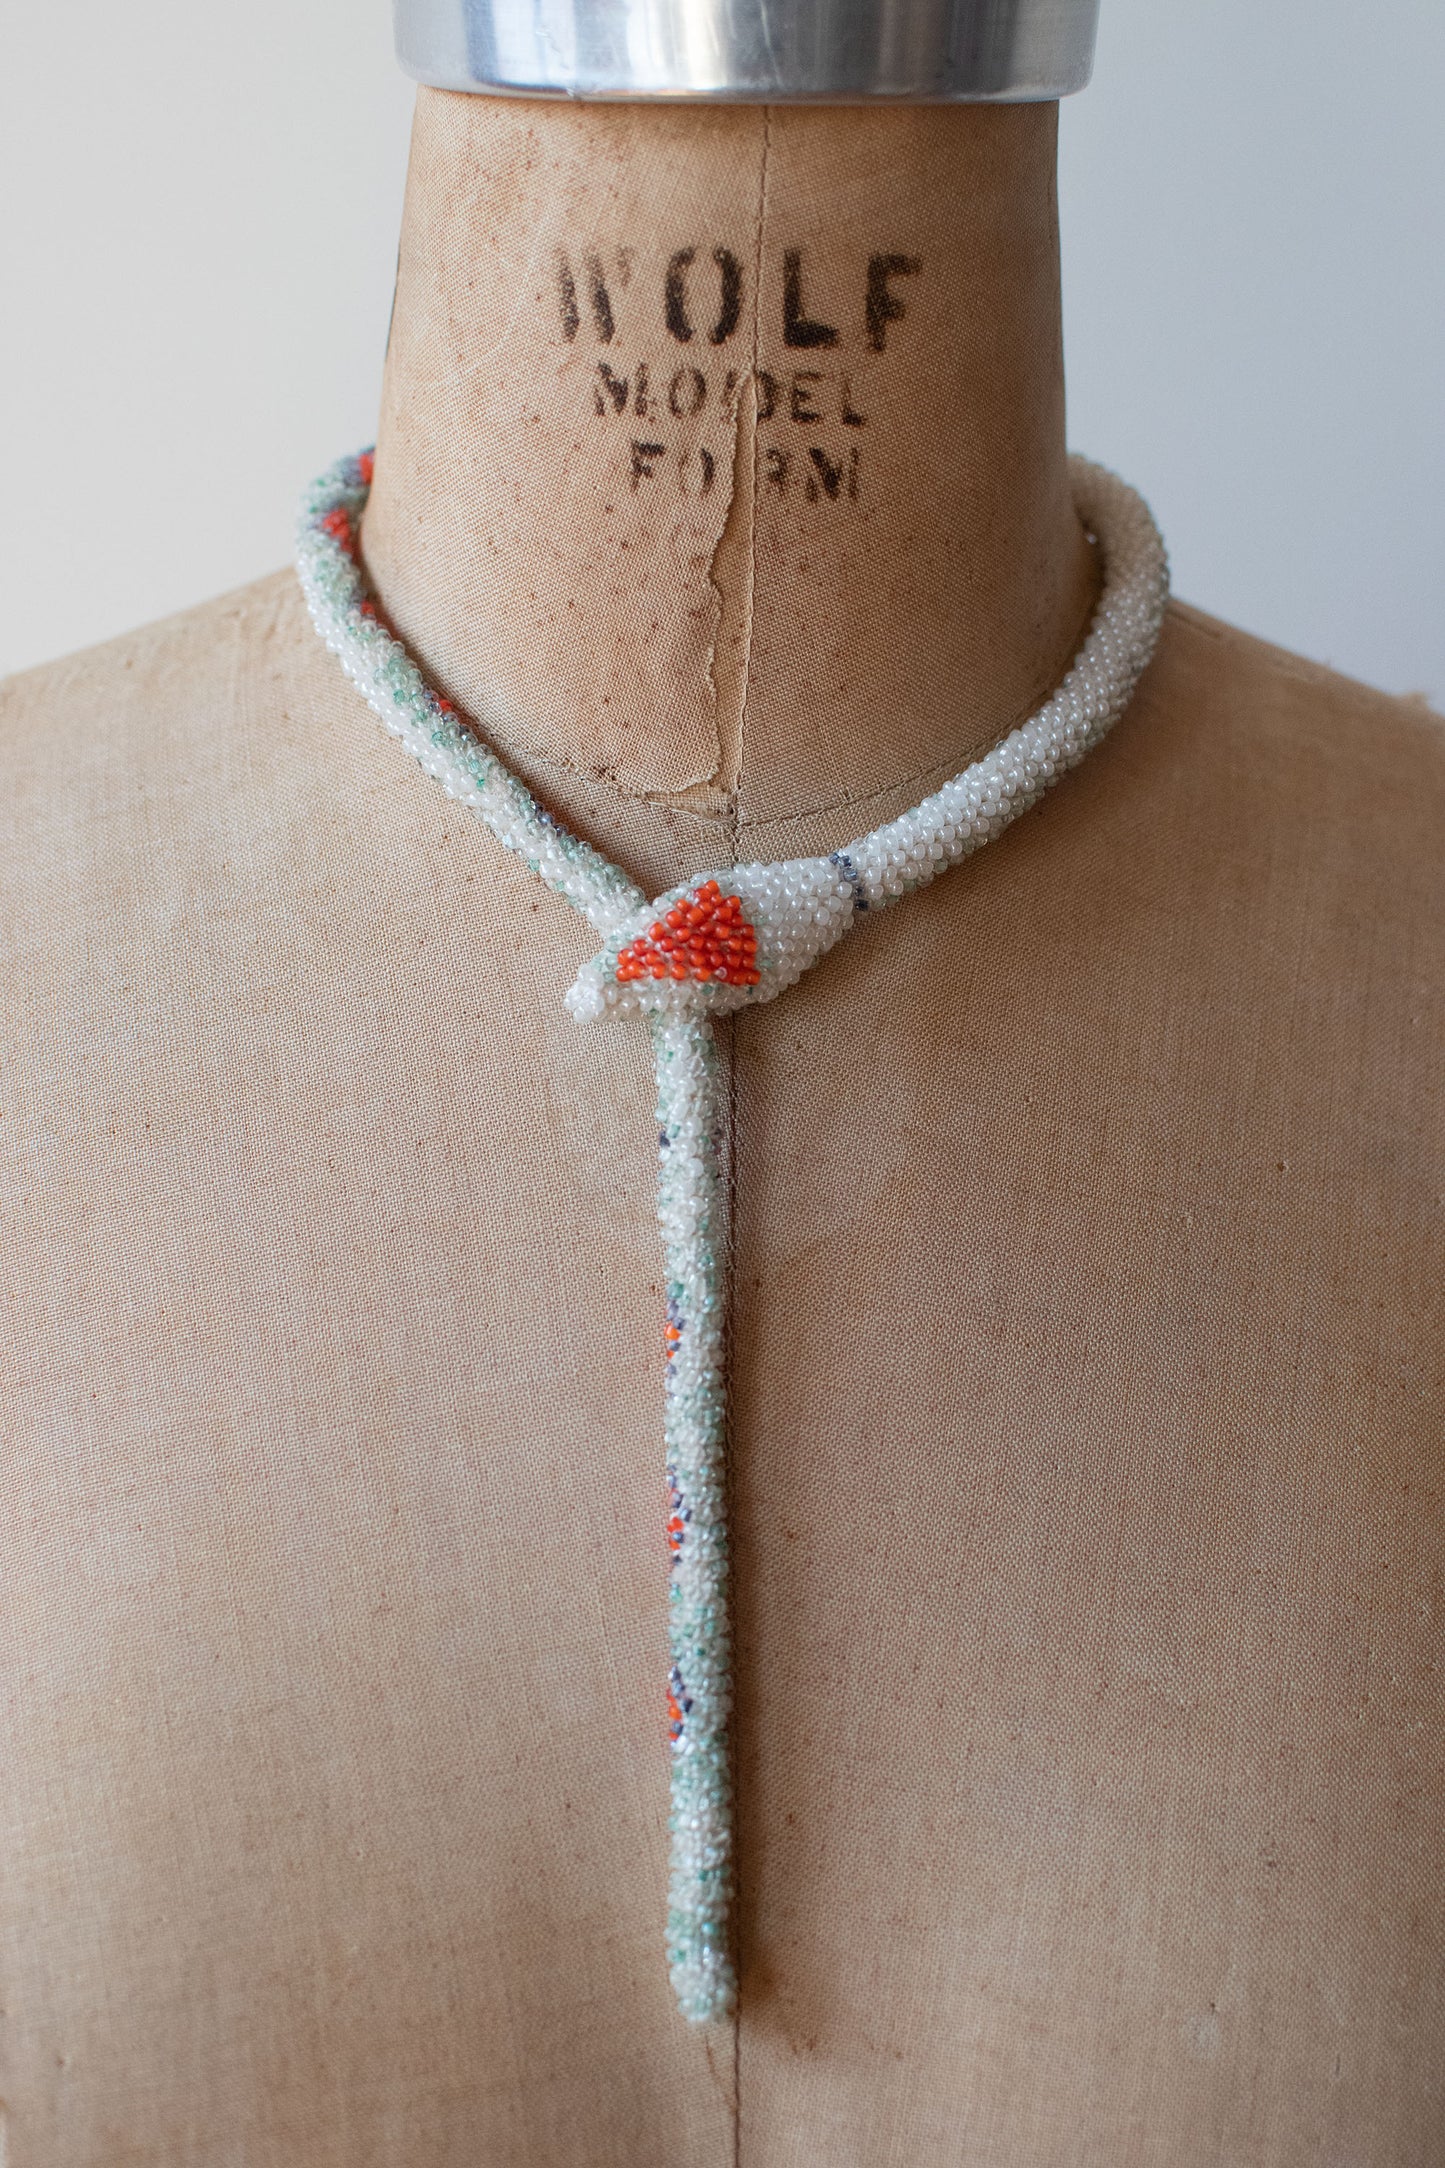 Bead Crochet Snake | Seafoam Diamond